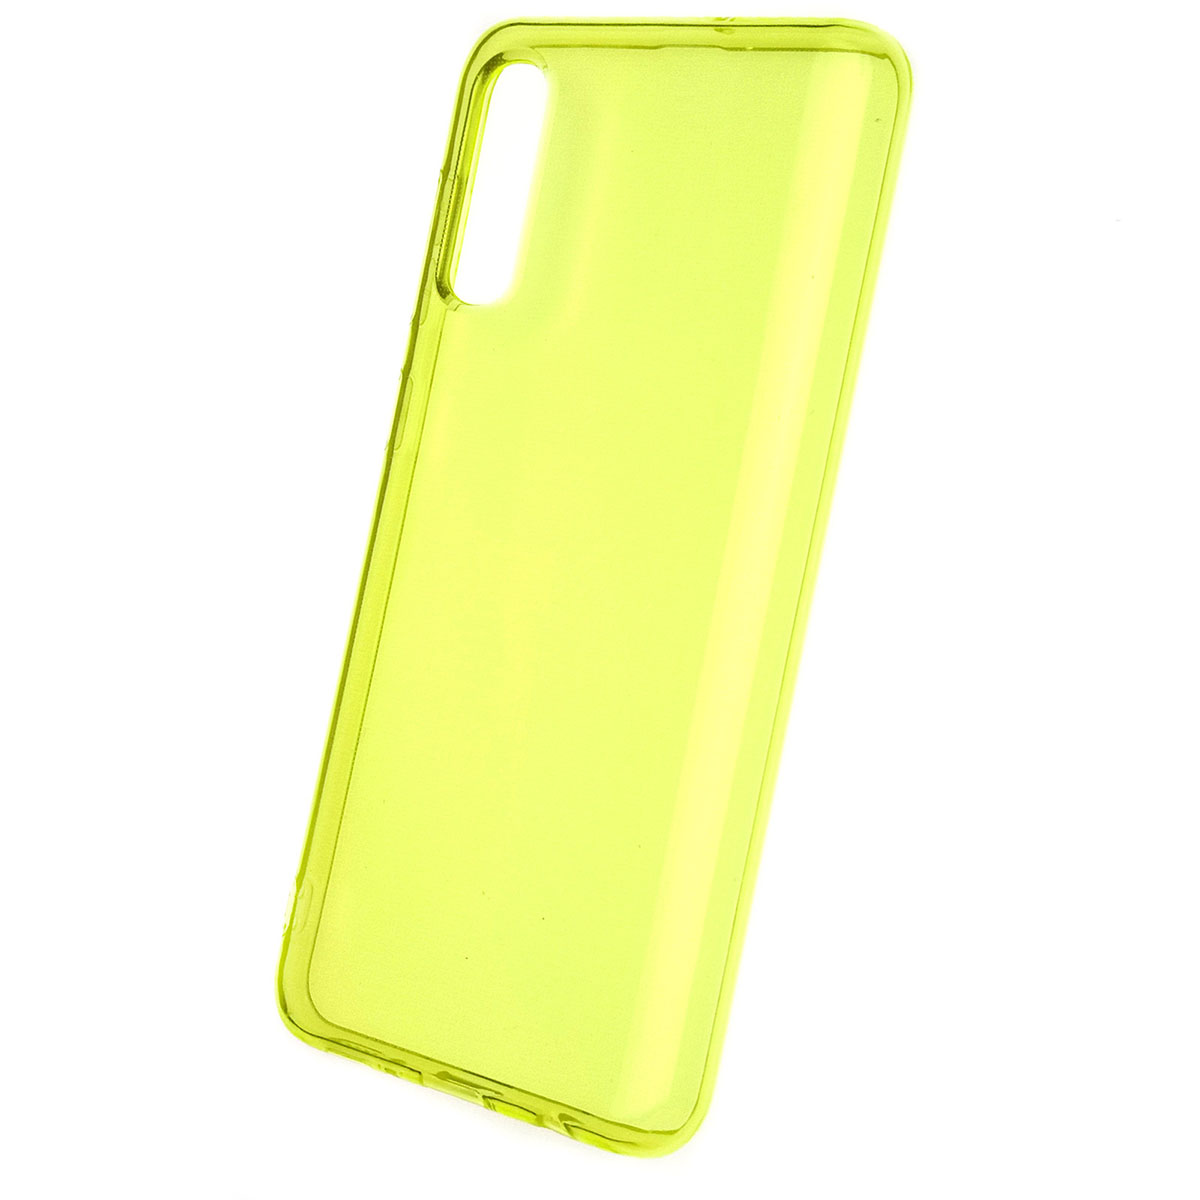 Чехол накладка Clear Case для SAMSUNG Galaxy A50 (SM-A505), A30s (SM-A307), A50s (SM-A507), силикон, прозрачно желтый.